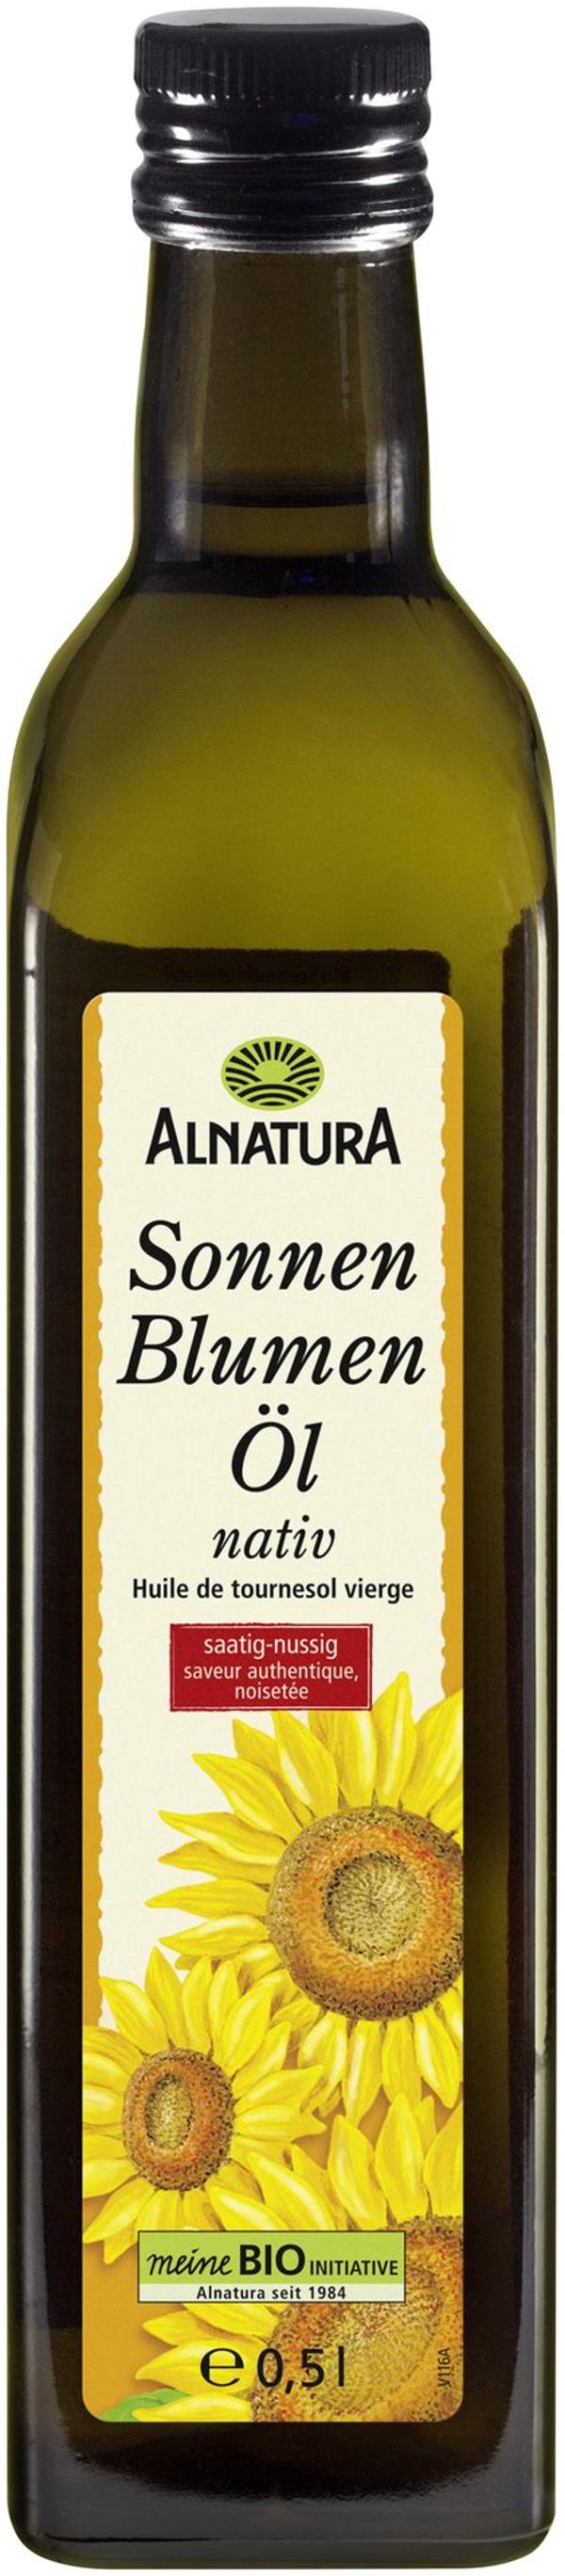 Produktfoto zu Sonnenblumenöl nativ 500 ml Alnatura